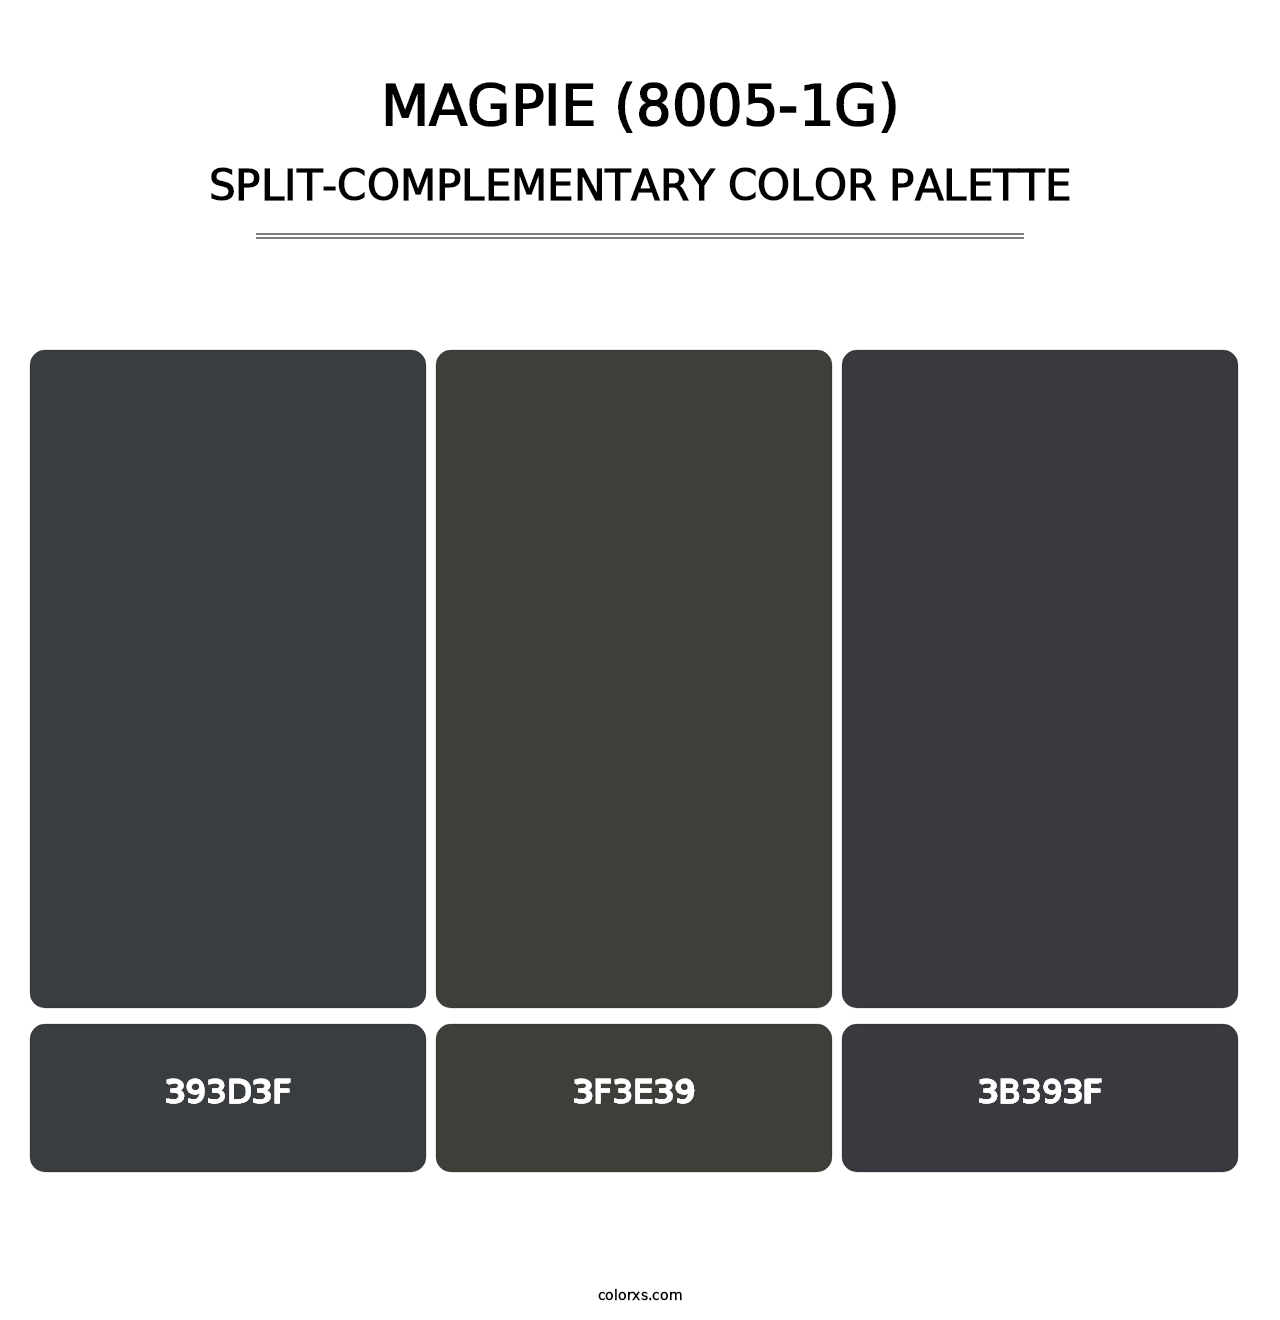 Magpie (8005-1G) - Split-Complementary Color Palette